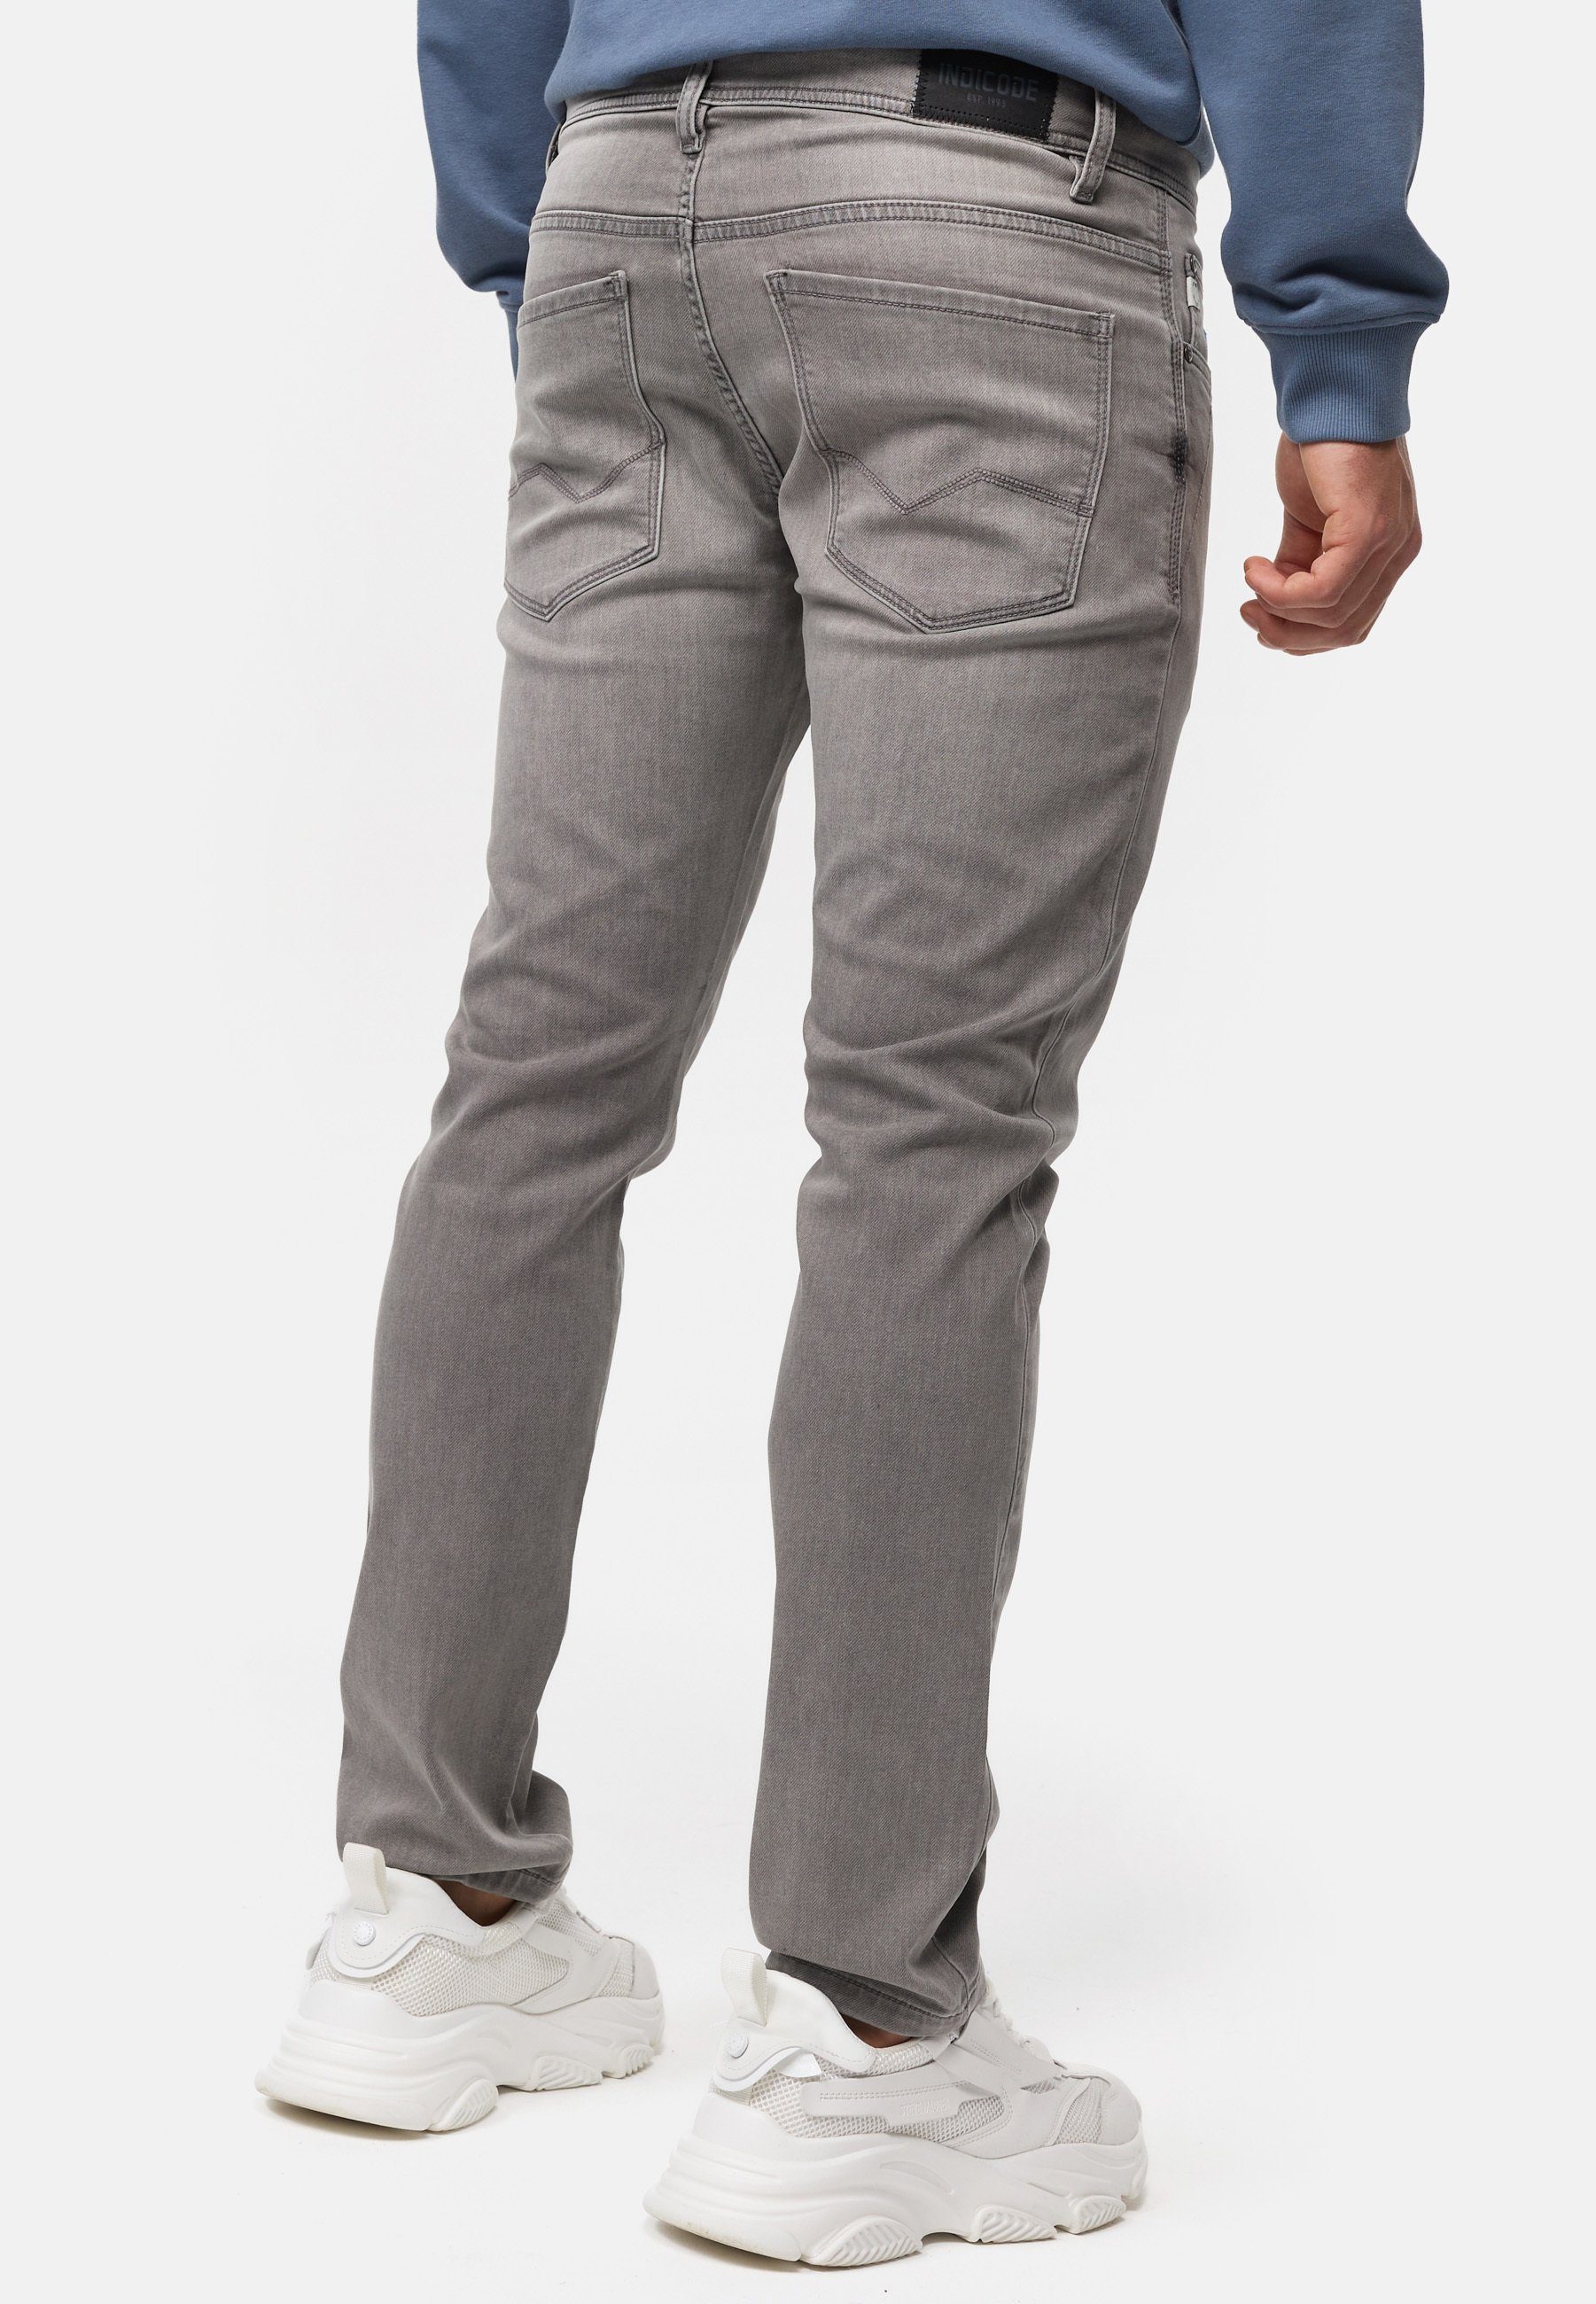 Pants Jogger Grey Indicode Vintage INCoil